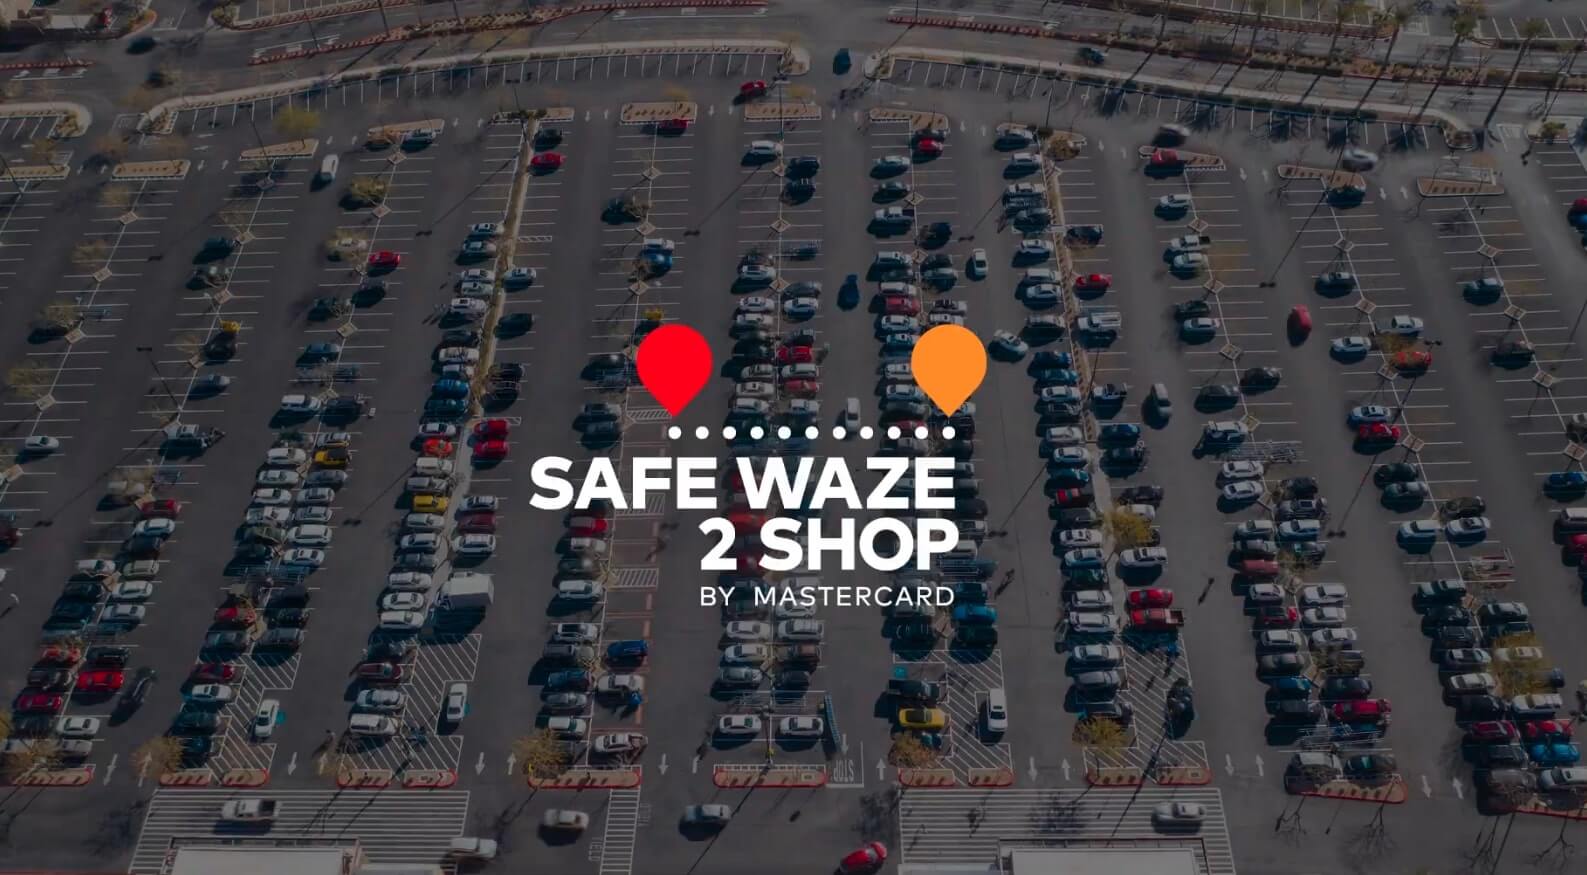 Mastercard: Safe Waze 2 Shop